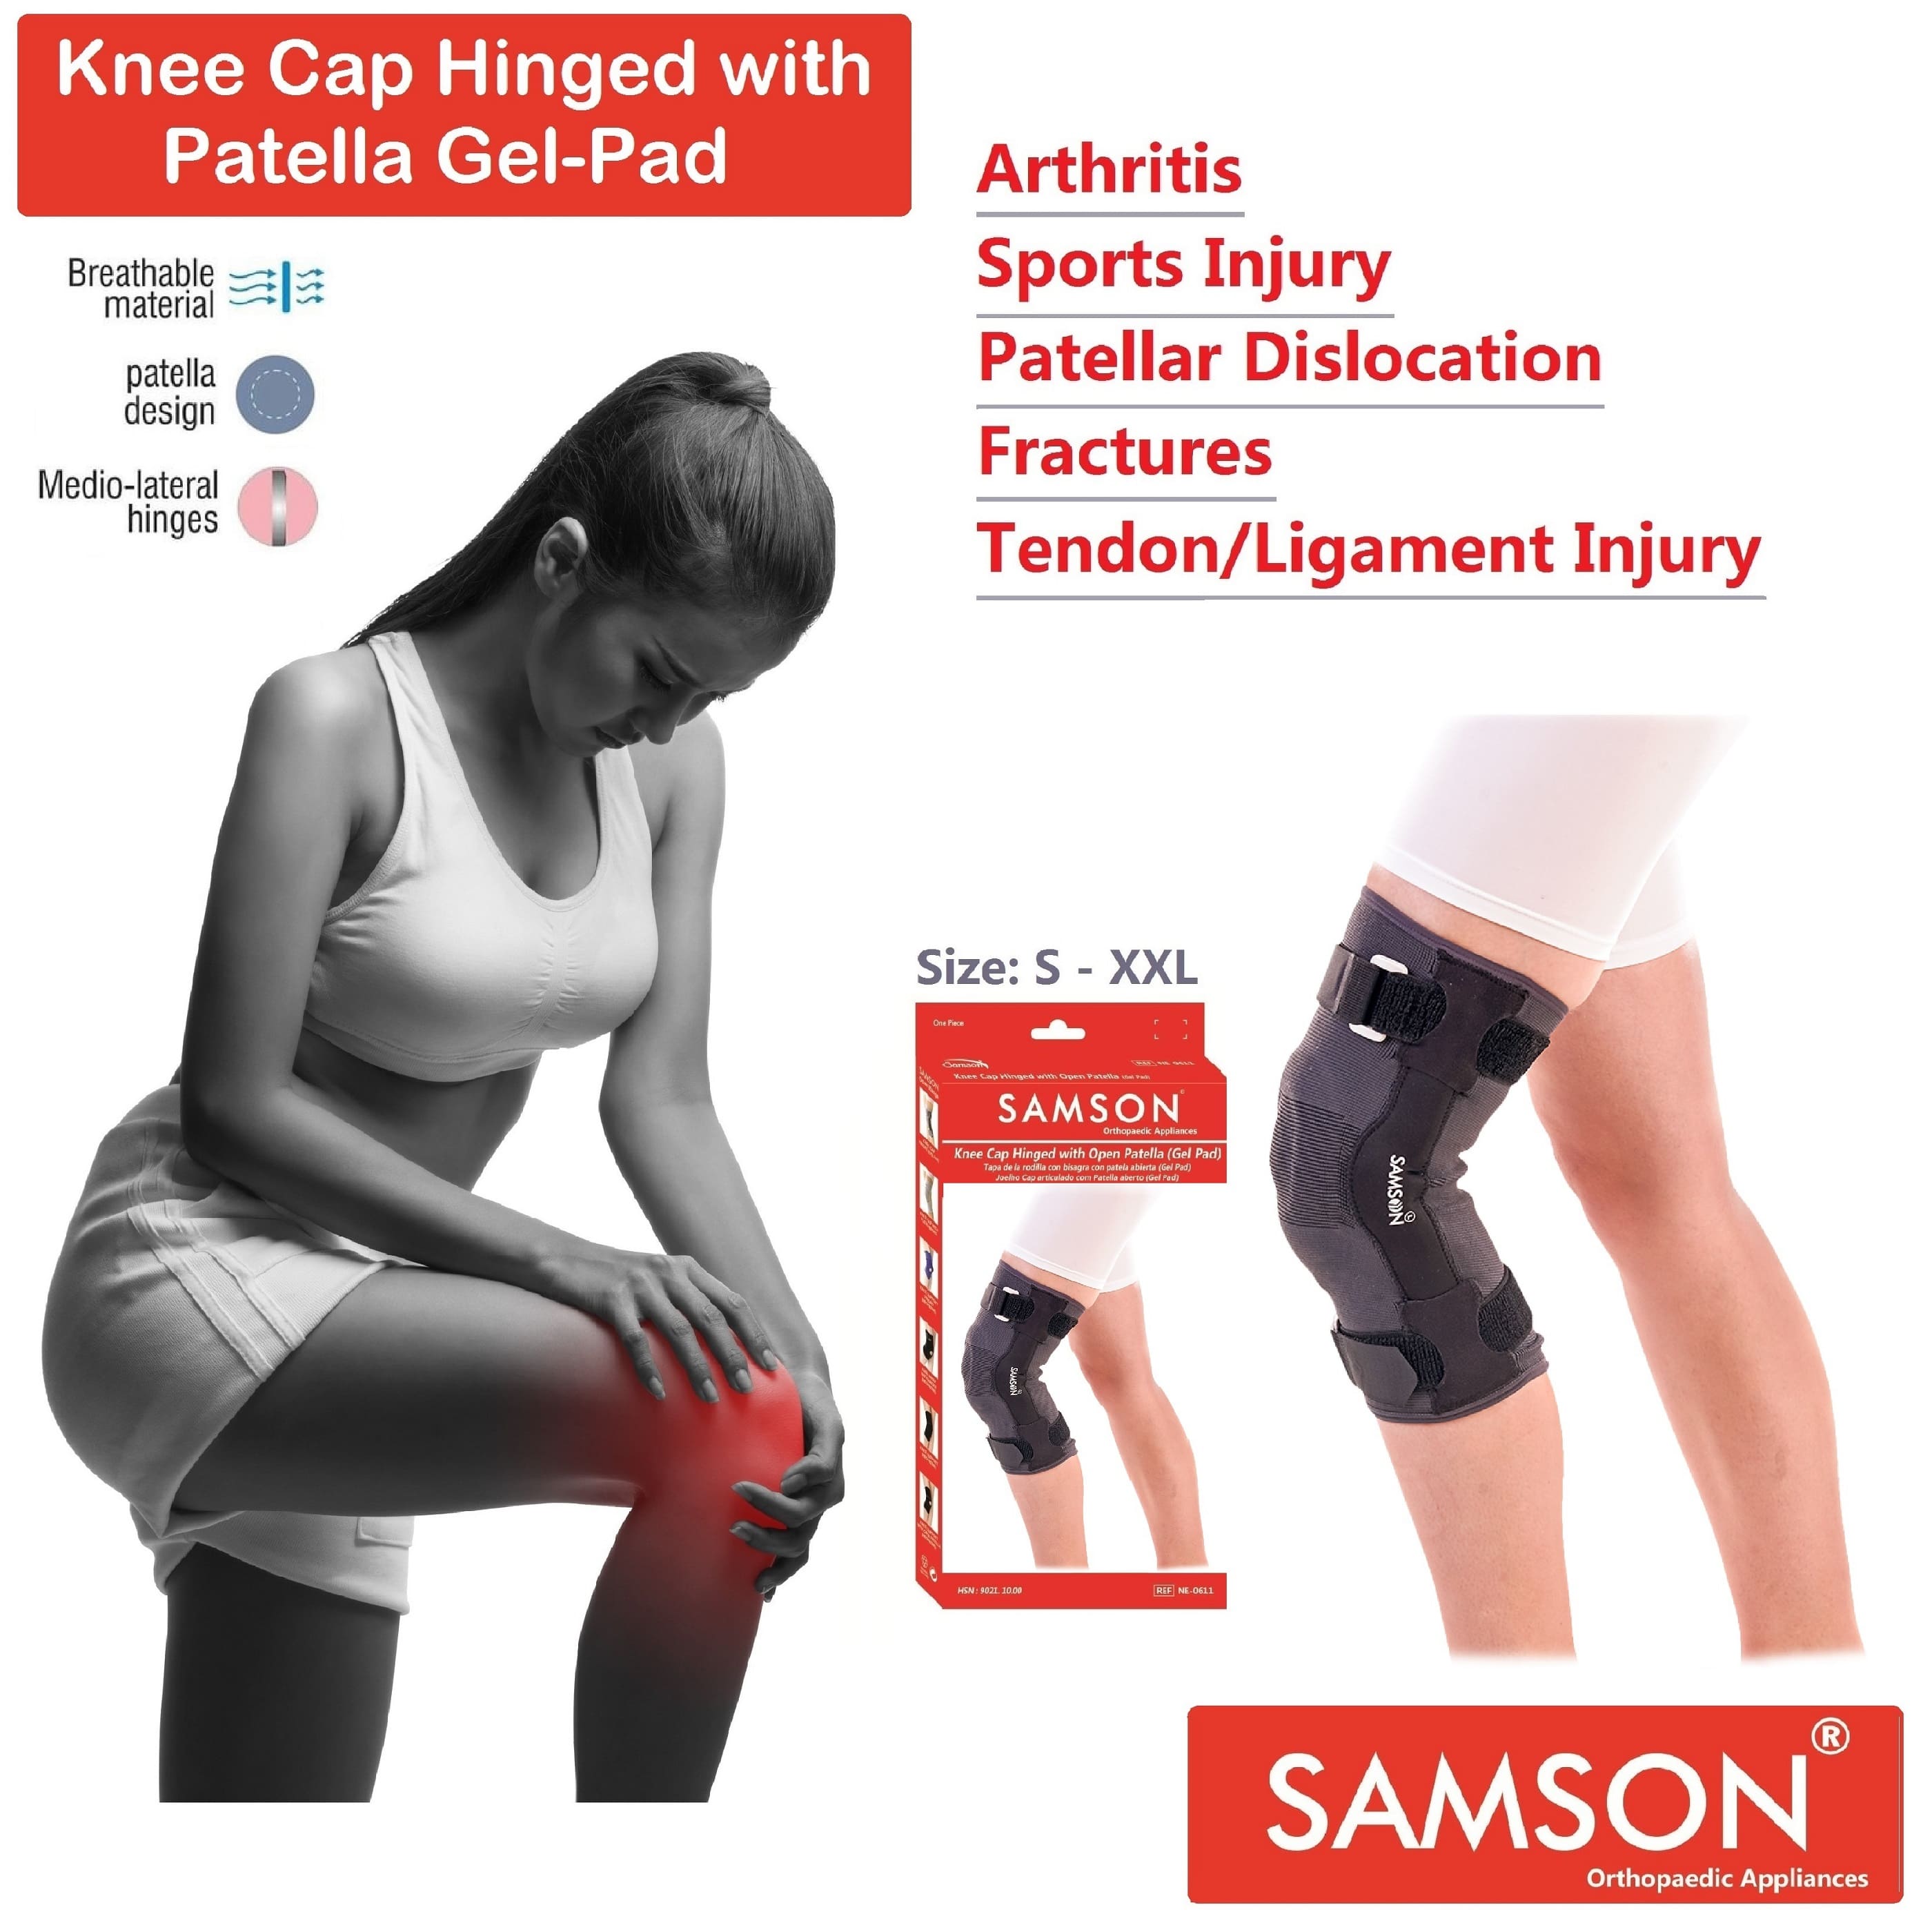 Samson Knee Cap Hinged with Patella Gel Pad - For Arthritis